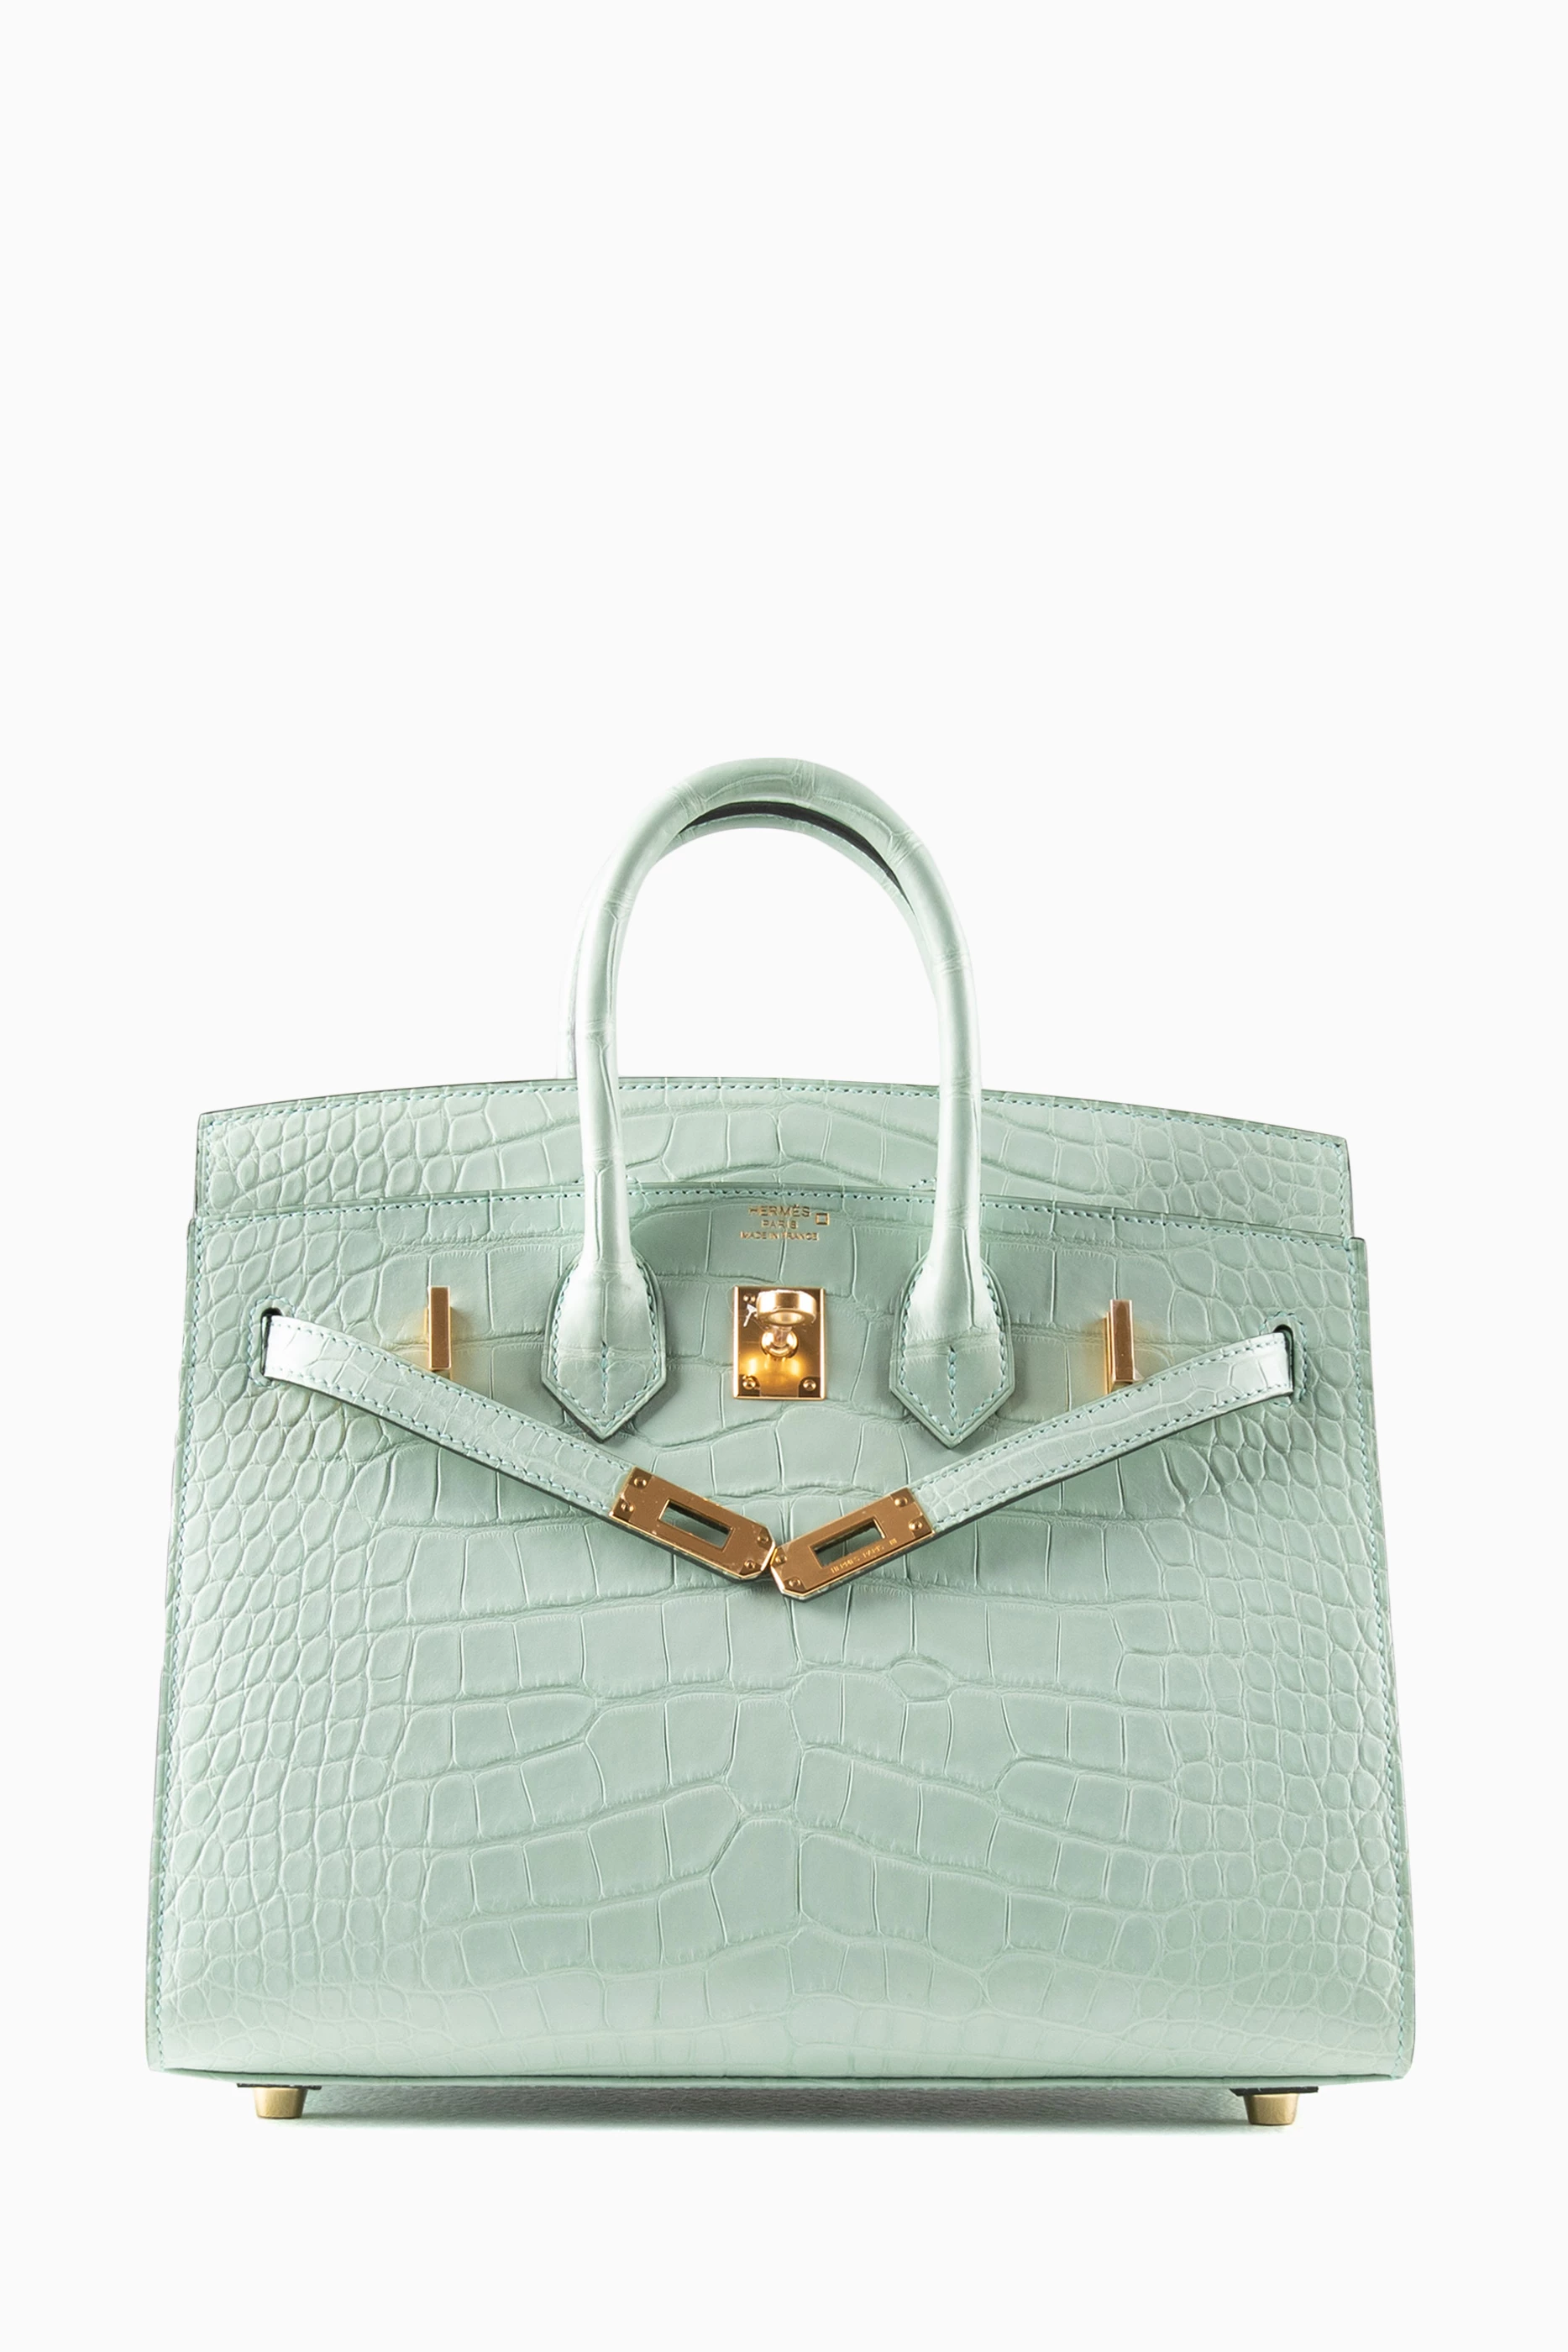 Hermes Green Vert D'eau Mint Crocodile Birkin 25 Handbag Kelly Bag